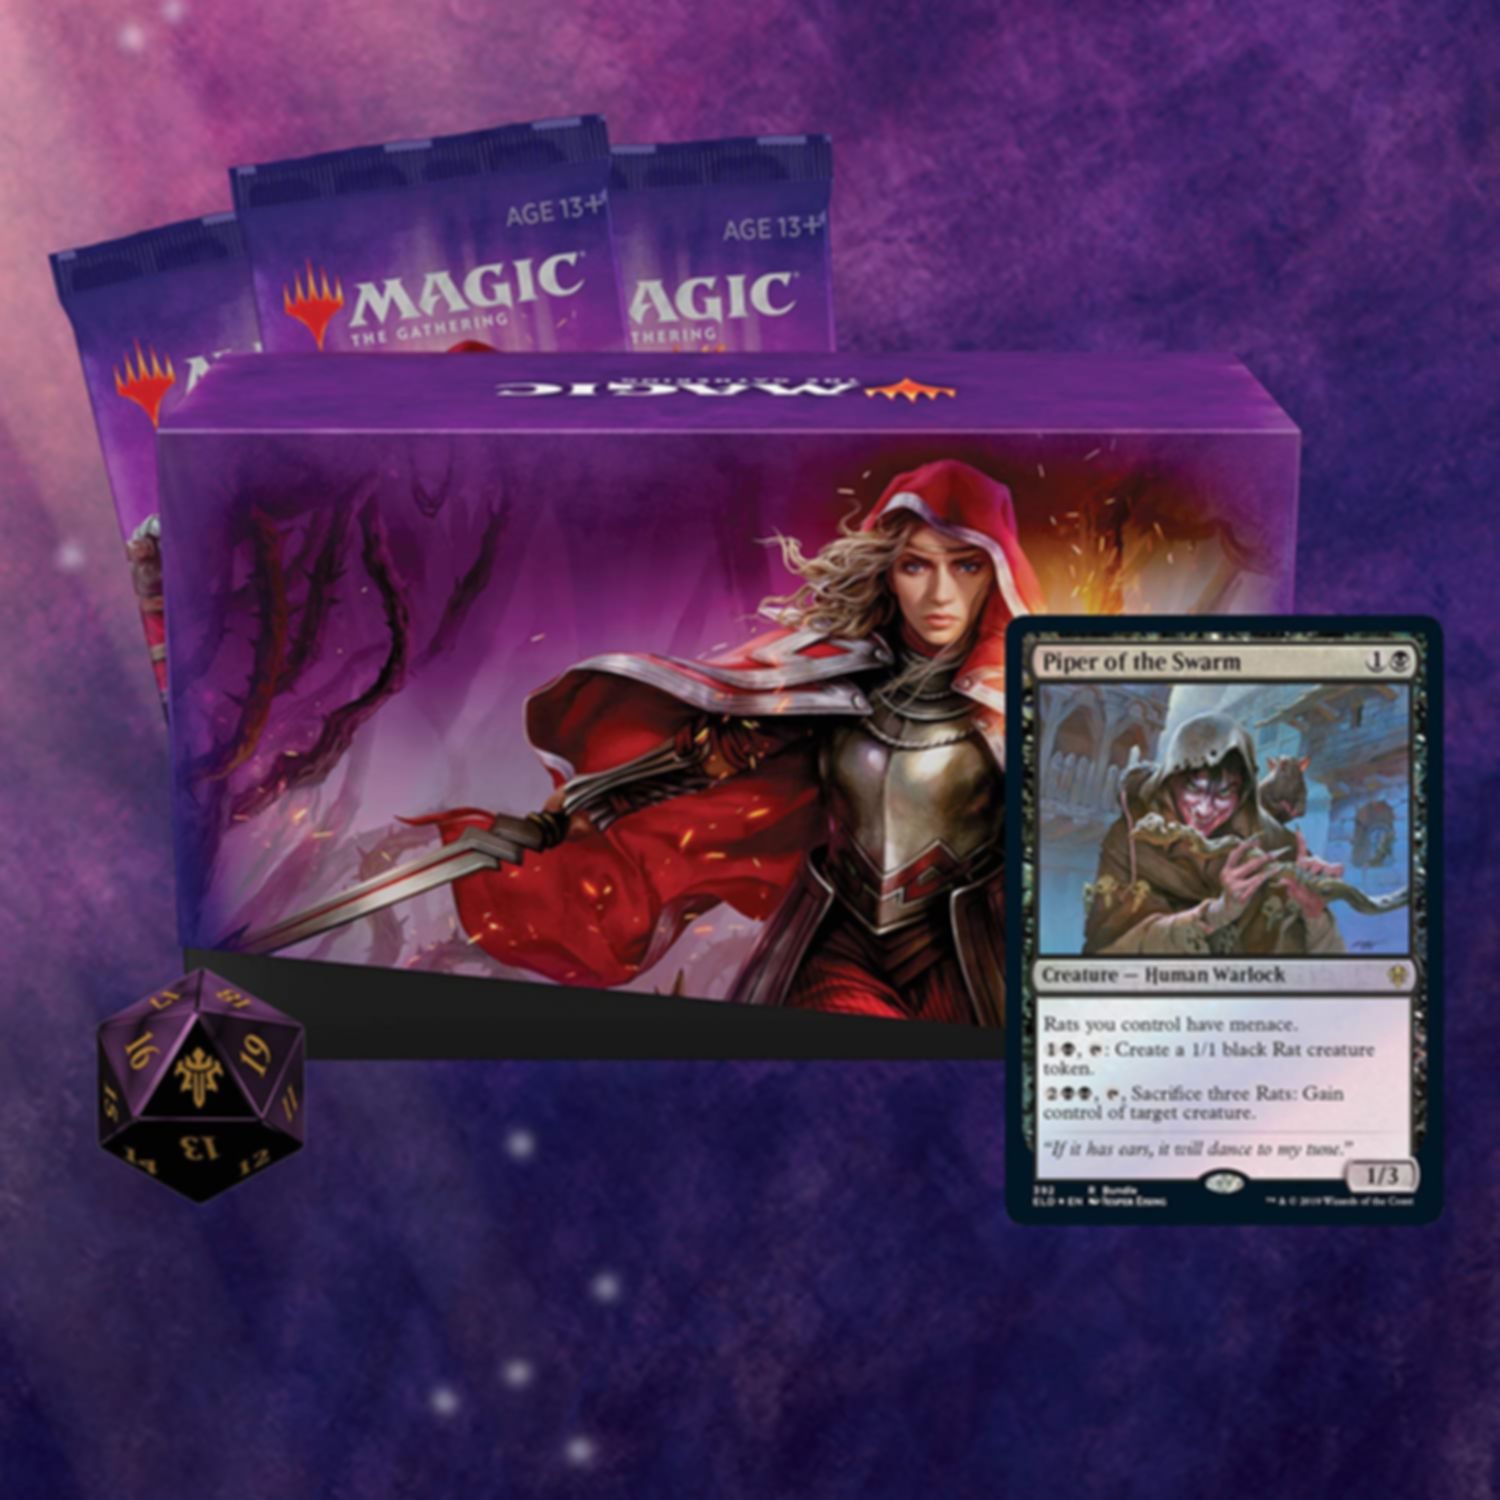 Magic: The Gathering Throne of Eldraine Bundle components